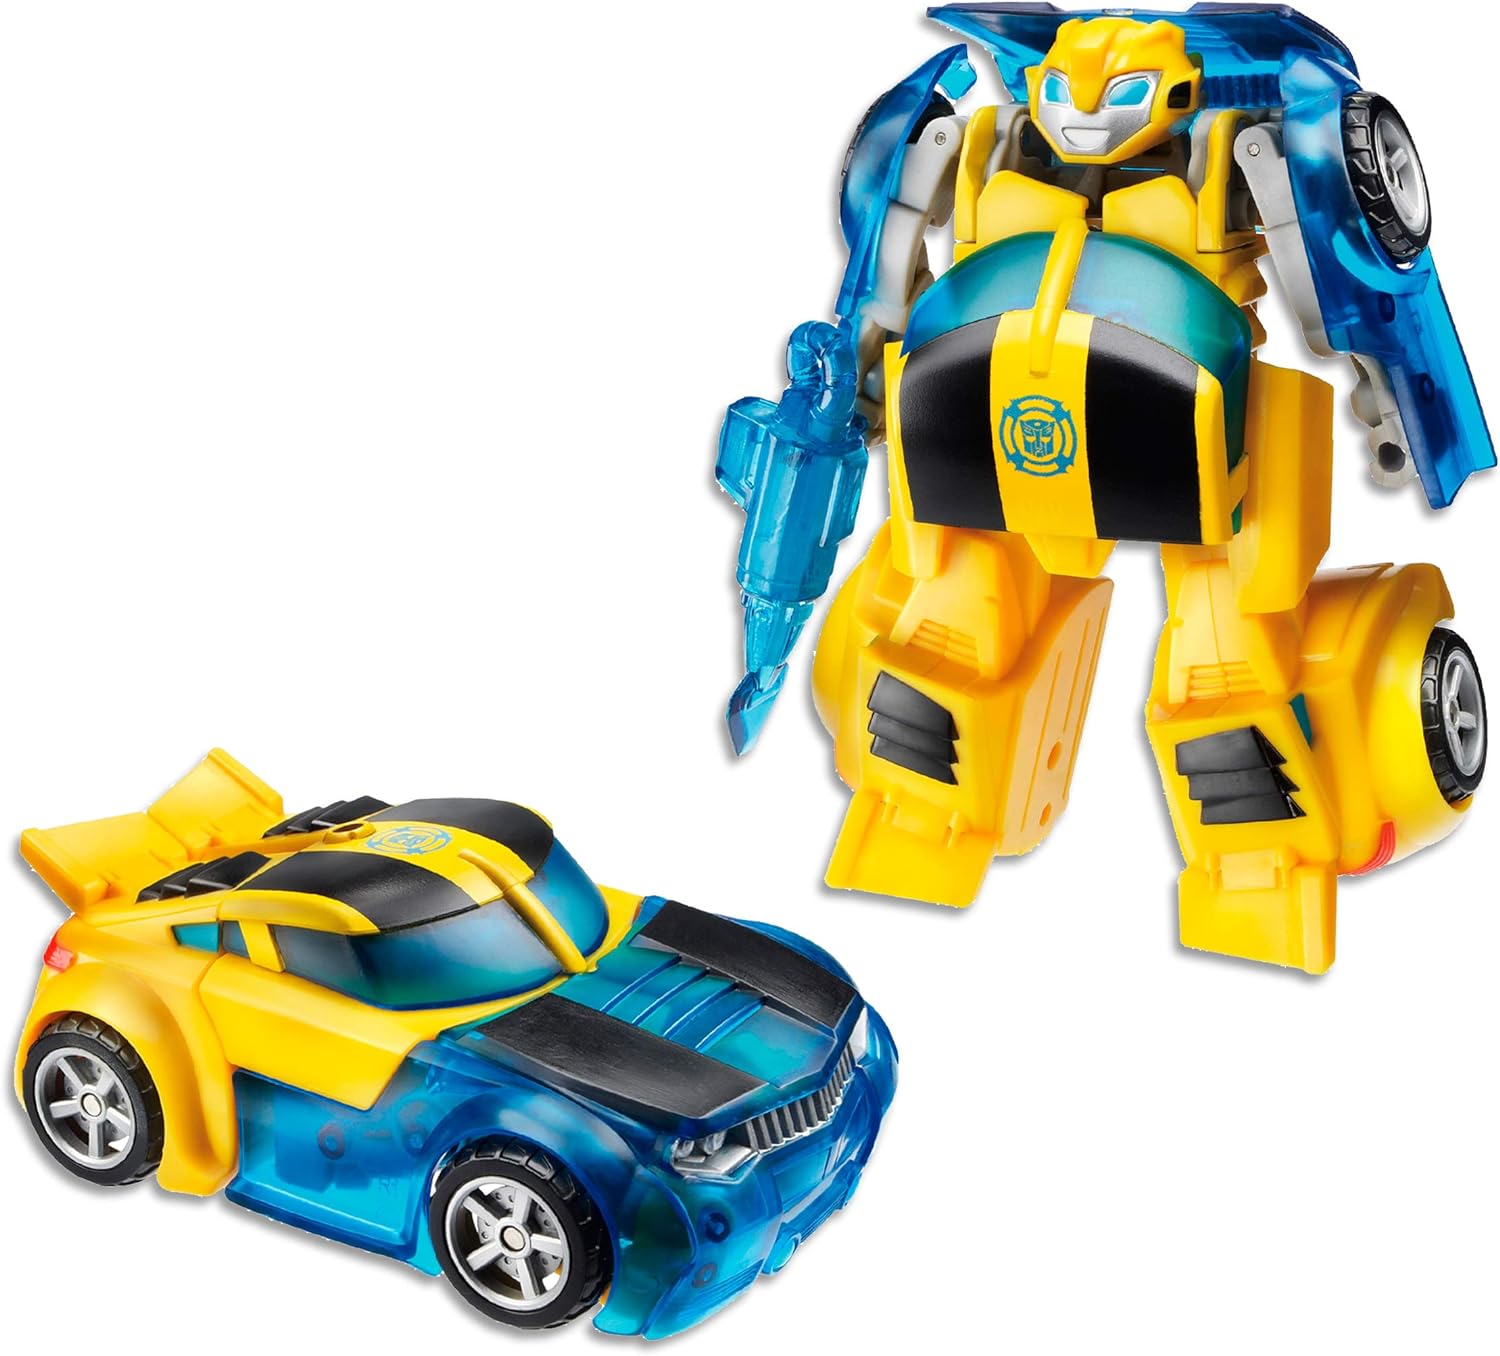 Hasbro Transformers Playskool Heroes Rescue Bots Academy Hot Rod Action Figure